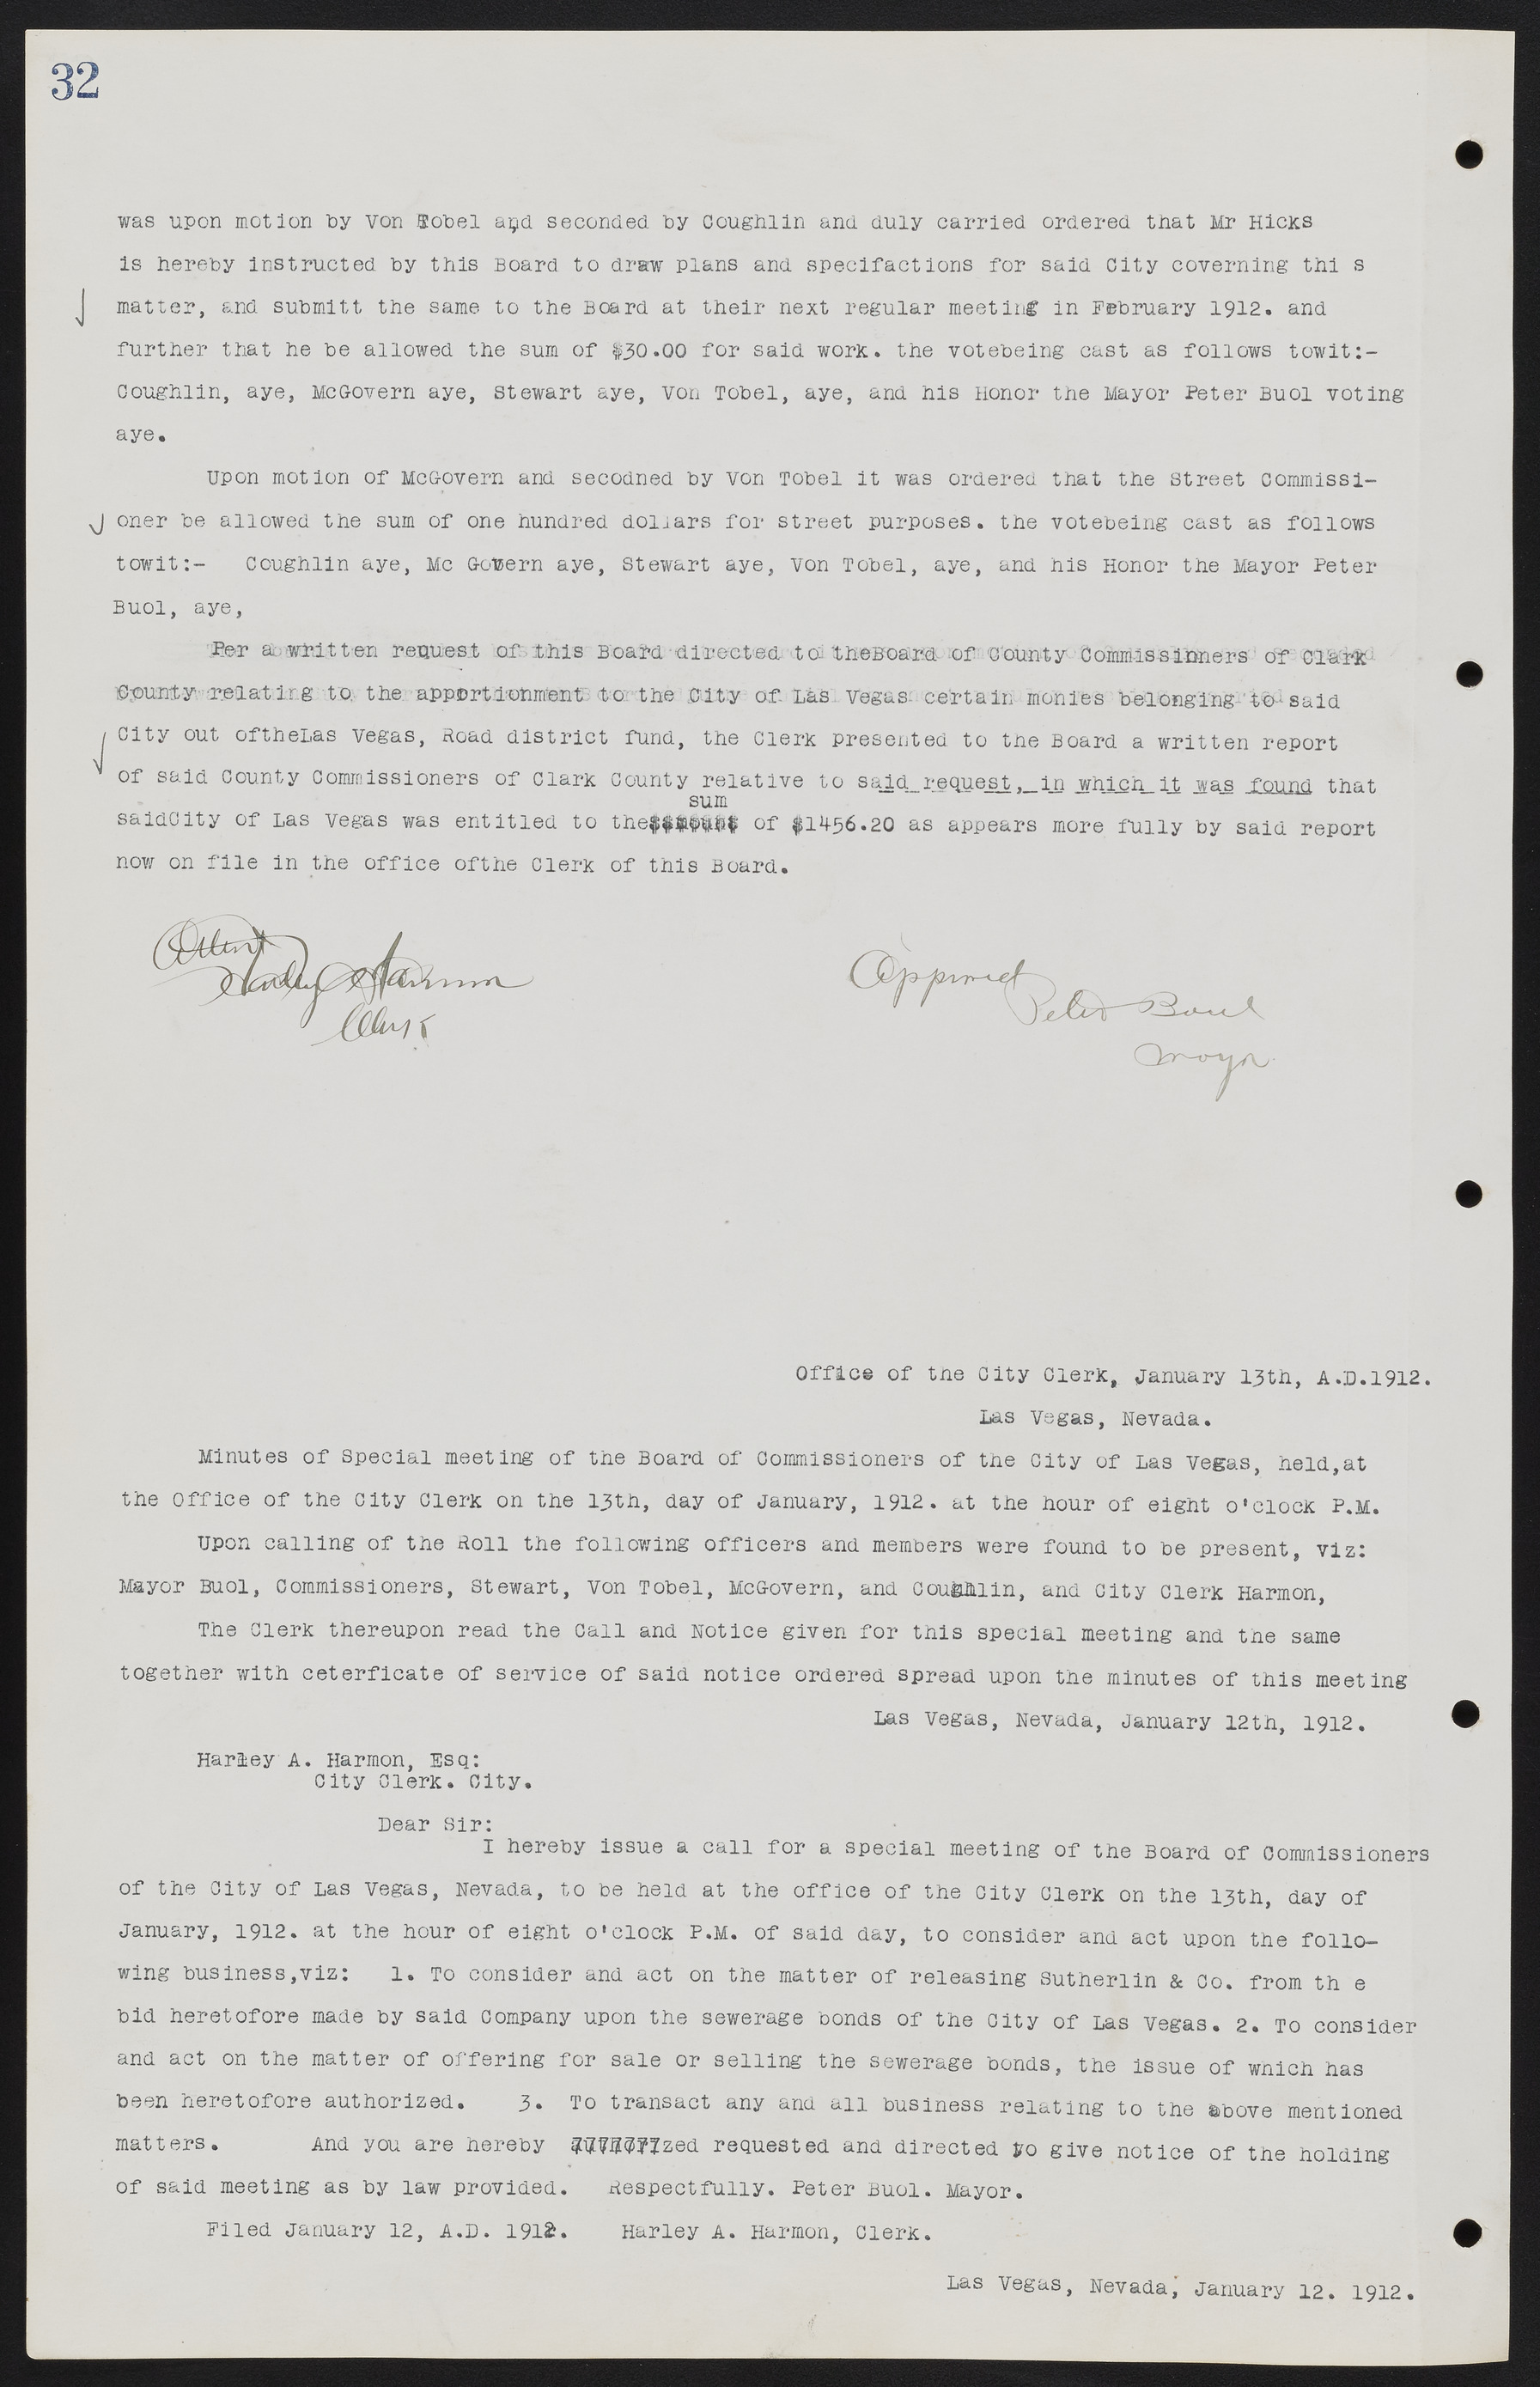 Las Vegas City Commission Minutes, June 22, 1911 to February 7, 1922, lvc000001-46